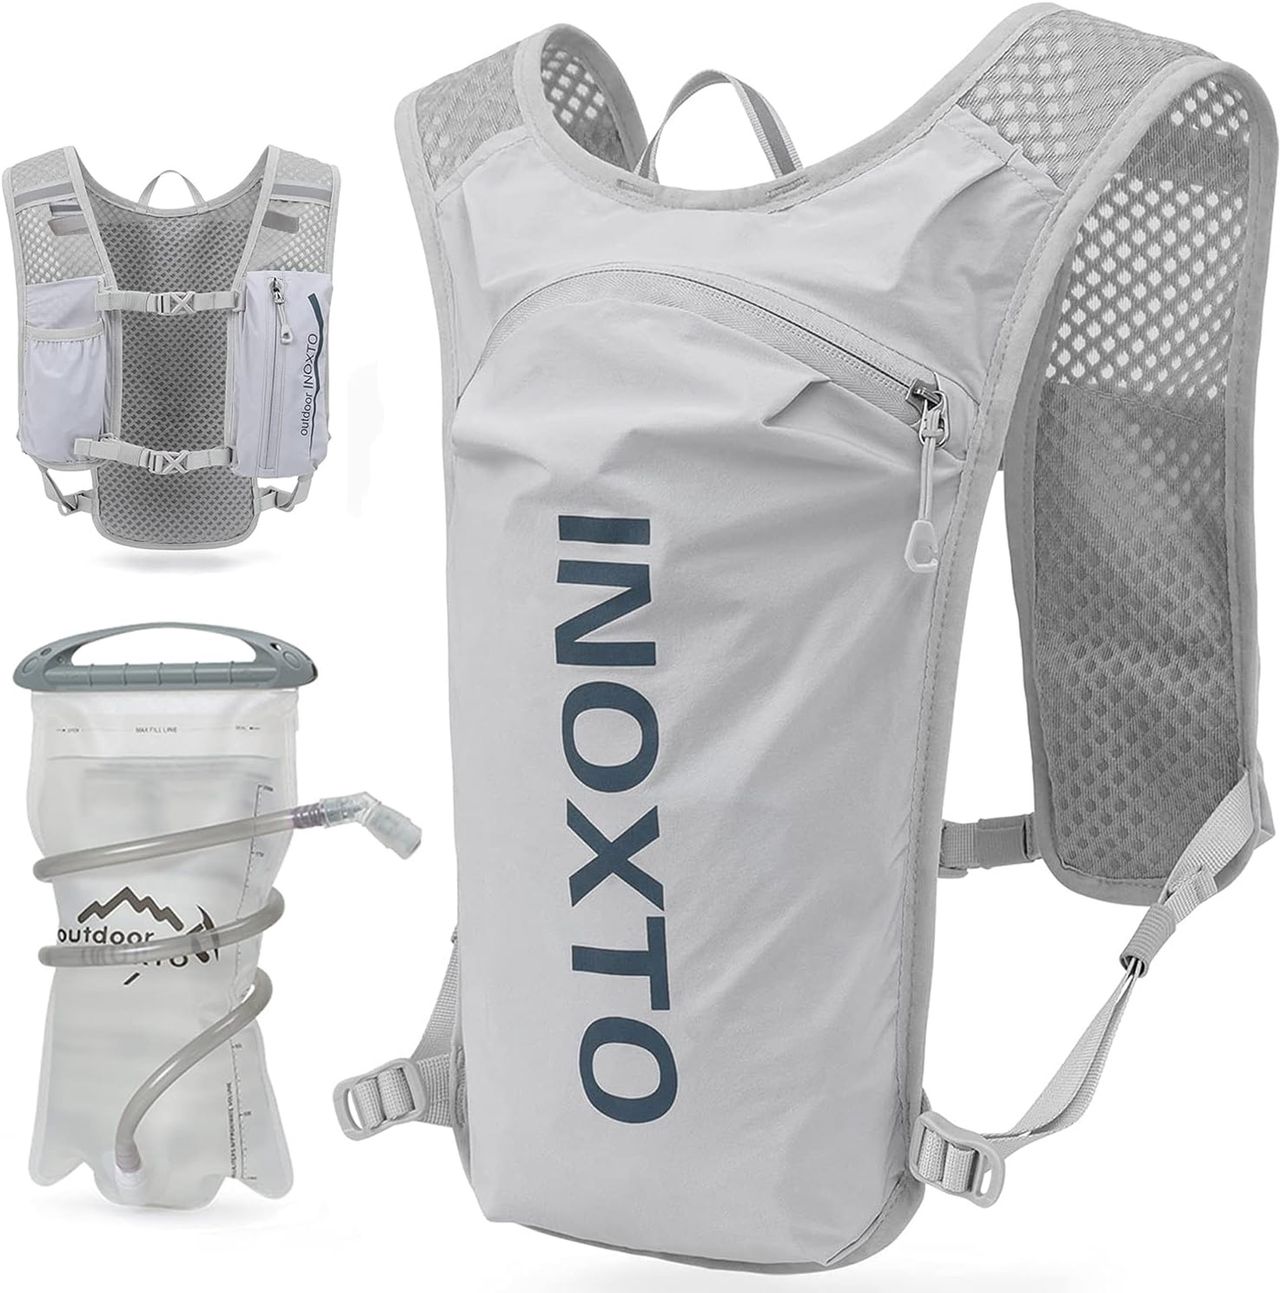 INOXTO sports backpack